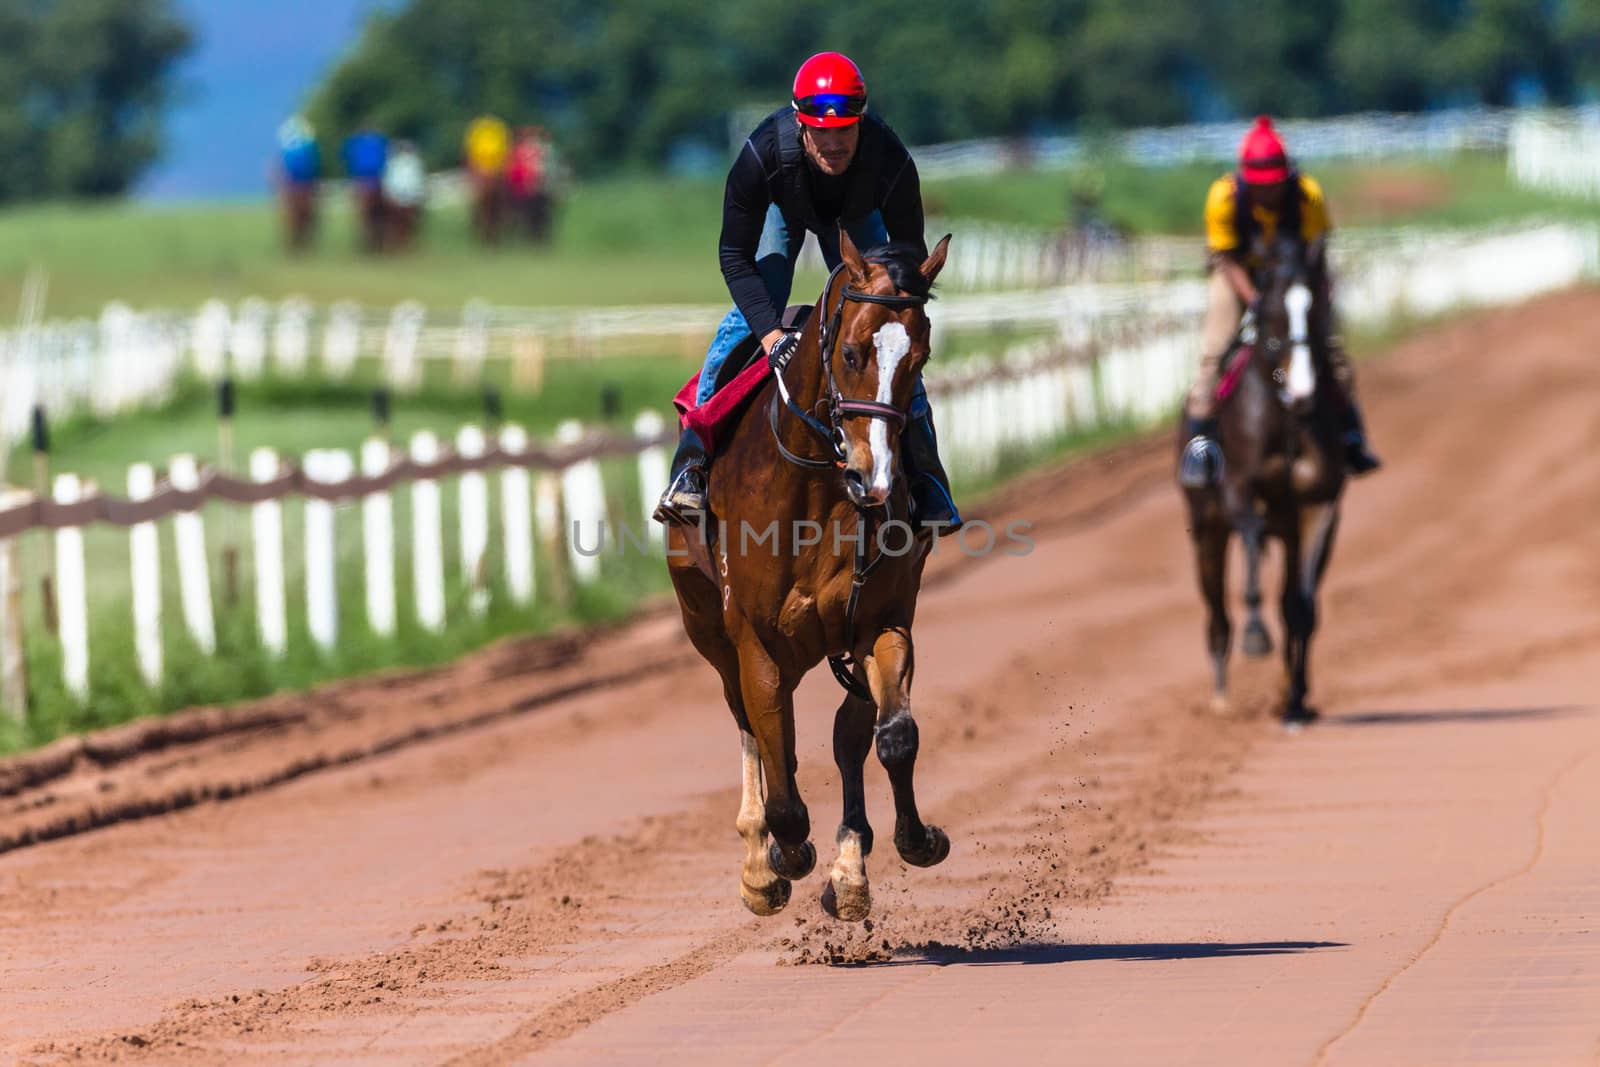 Jockeys Grooms riding race horses galloping on sand track training